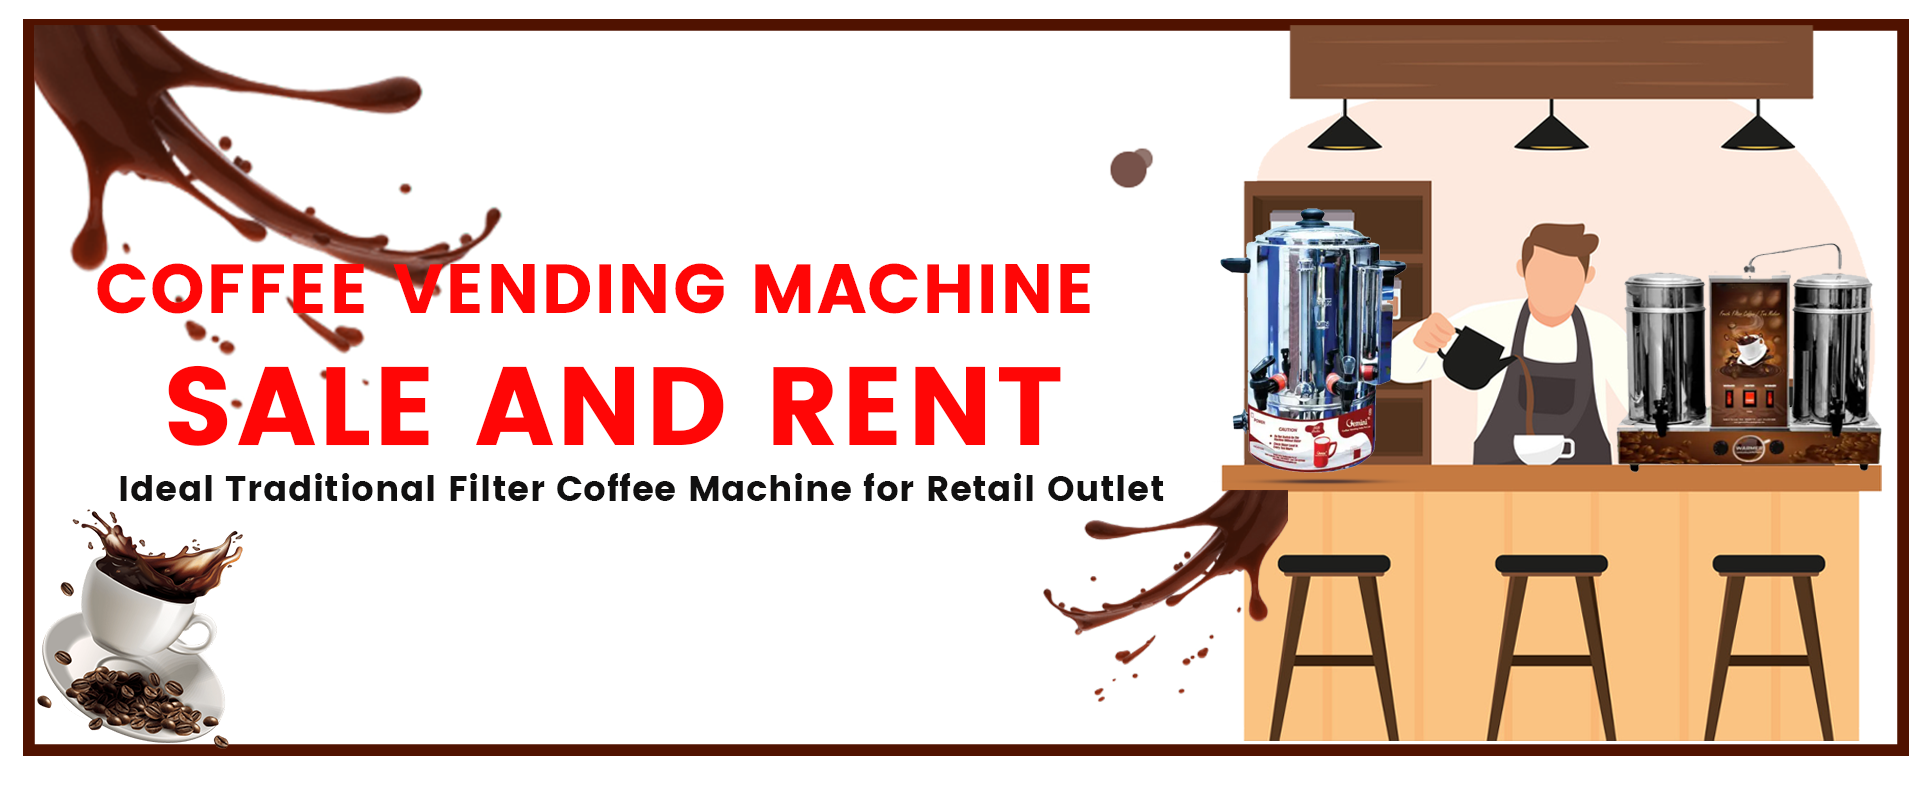 Tea Coffee Vending Machine Dealers in Chennai